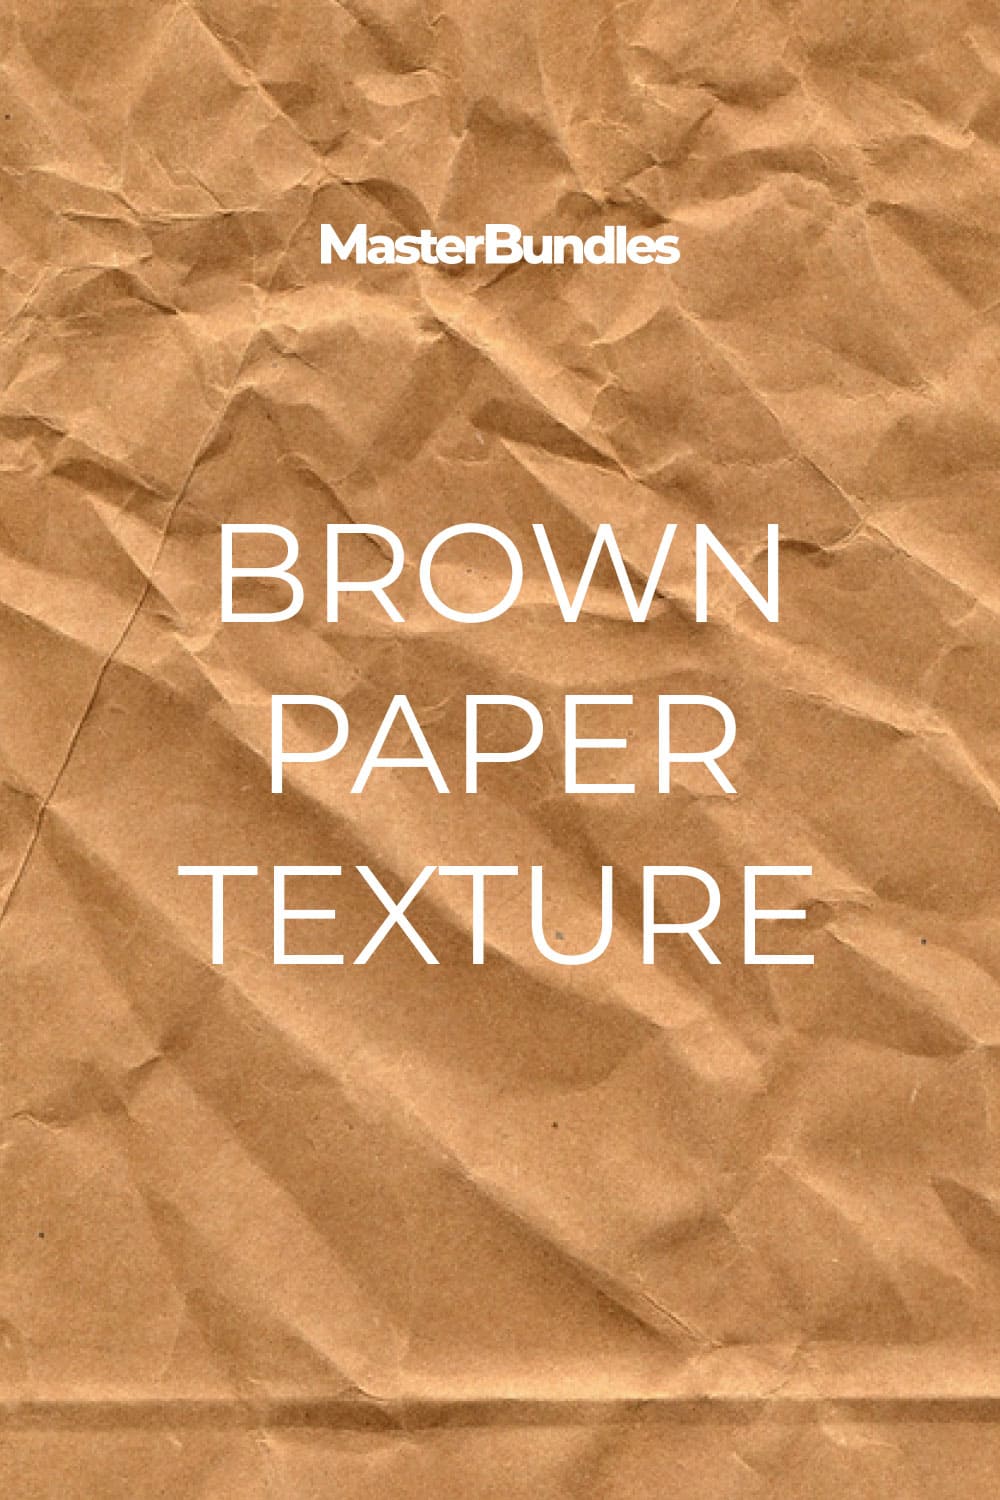 Crumpled brown paper texture.